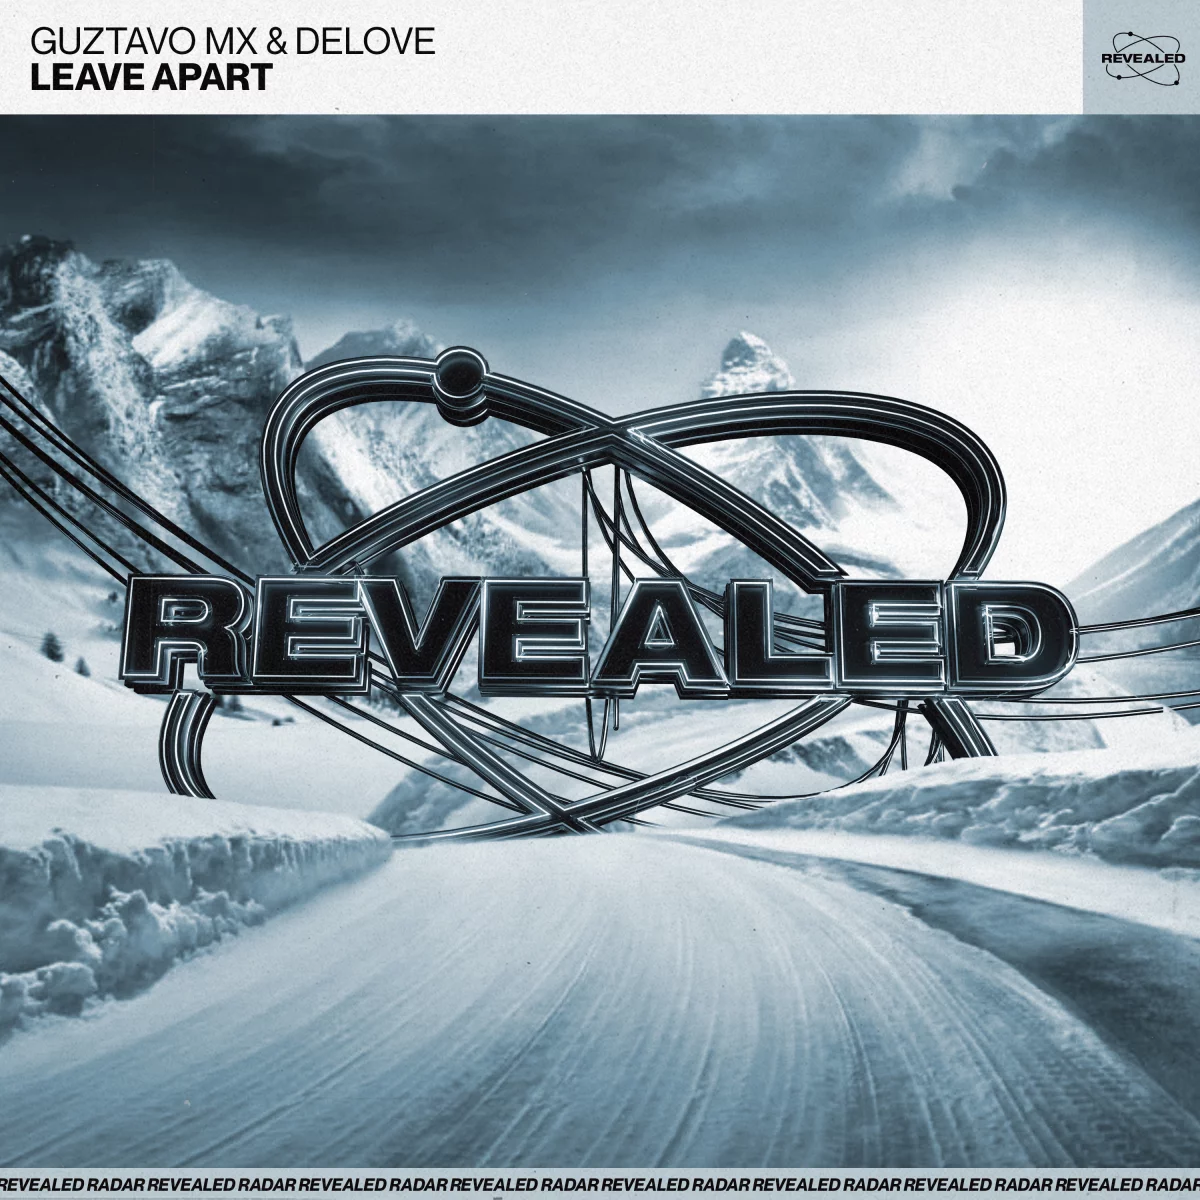 Leave Apart - Guztavo Mx⁠ & Delove⁠ 